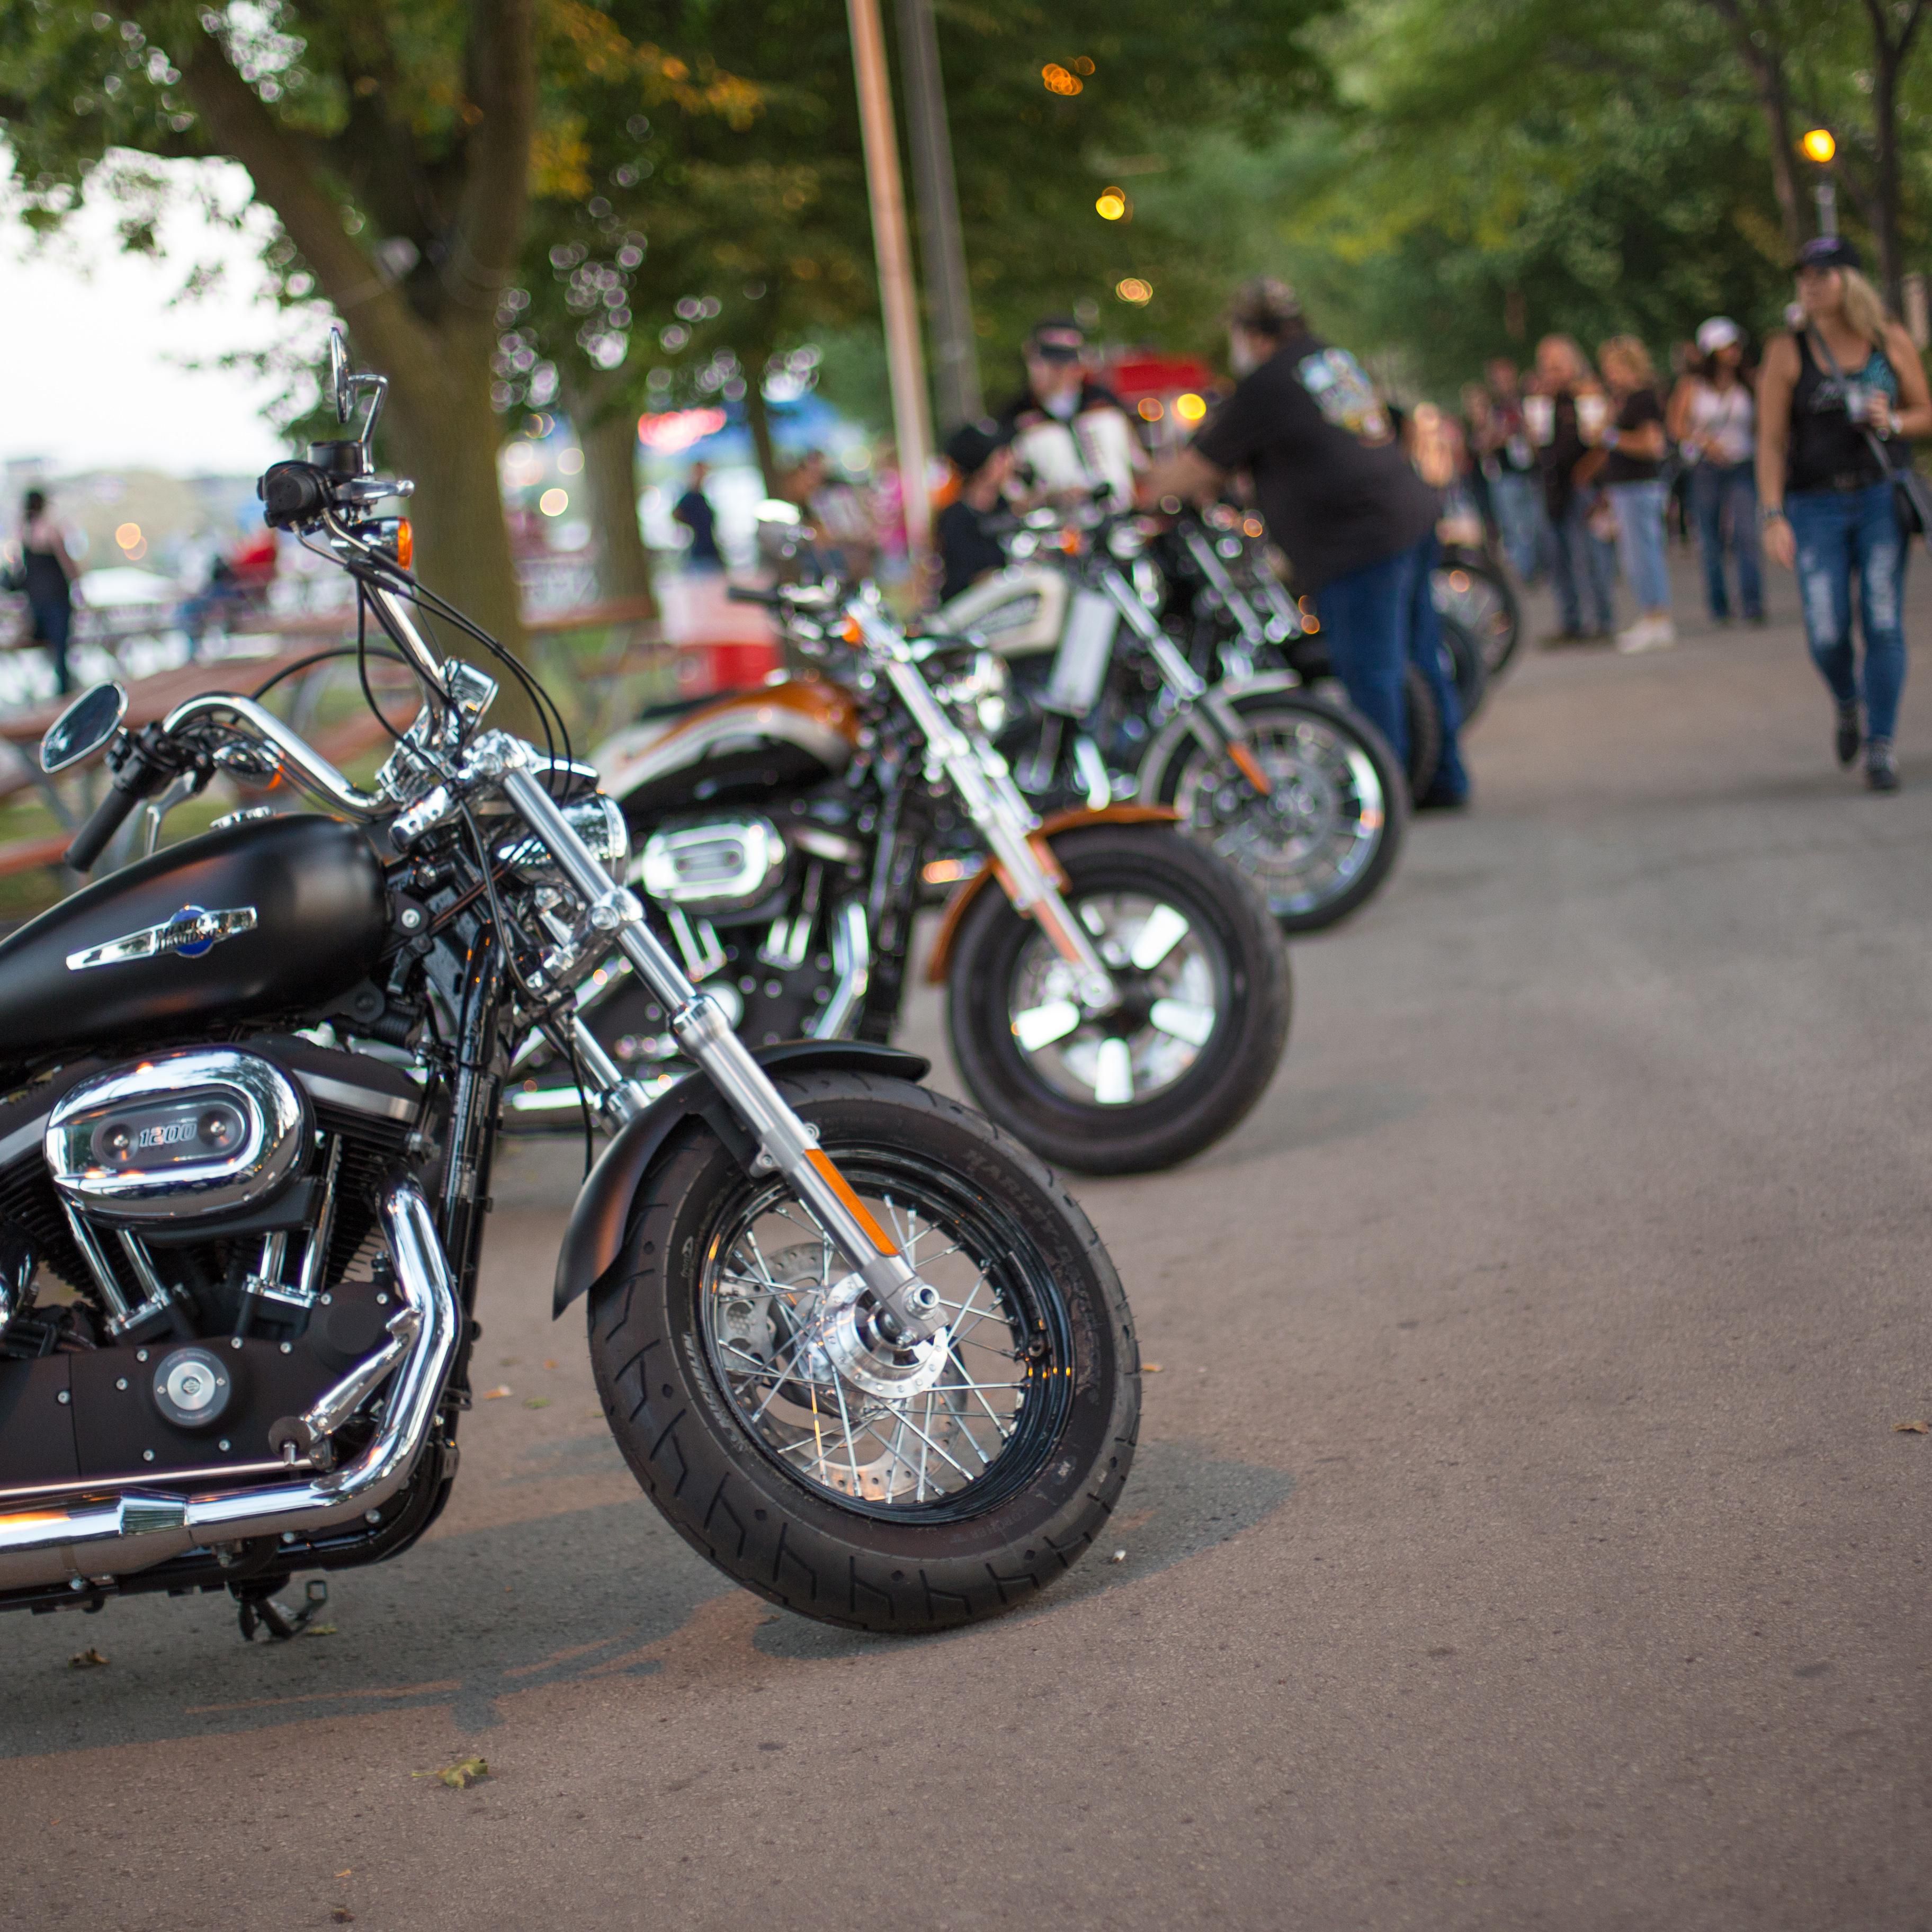 Milwaukee - Home to Harley Davidson!